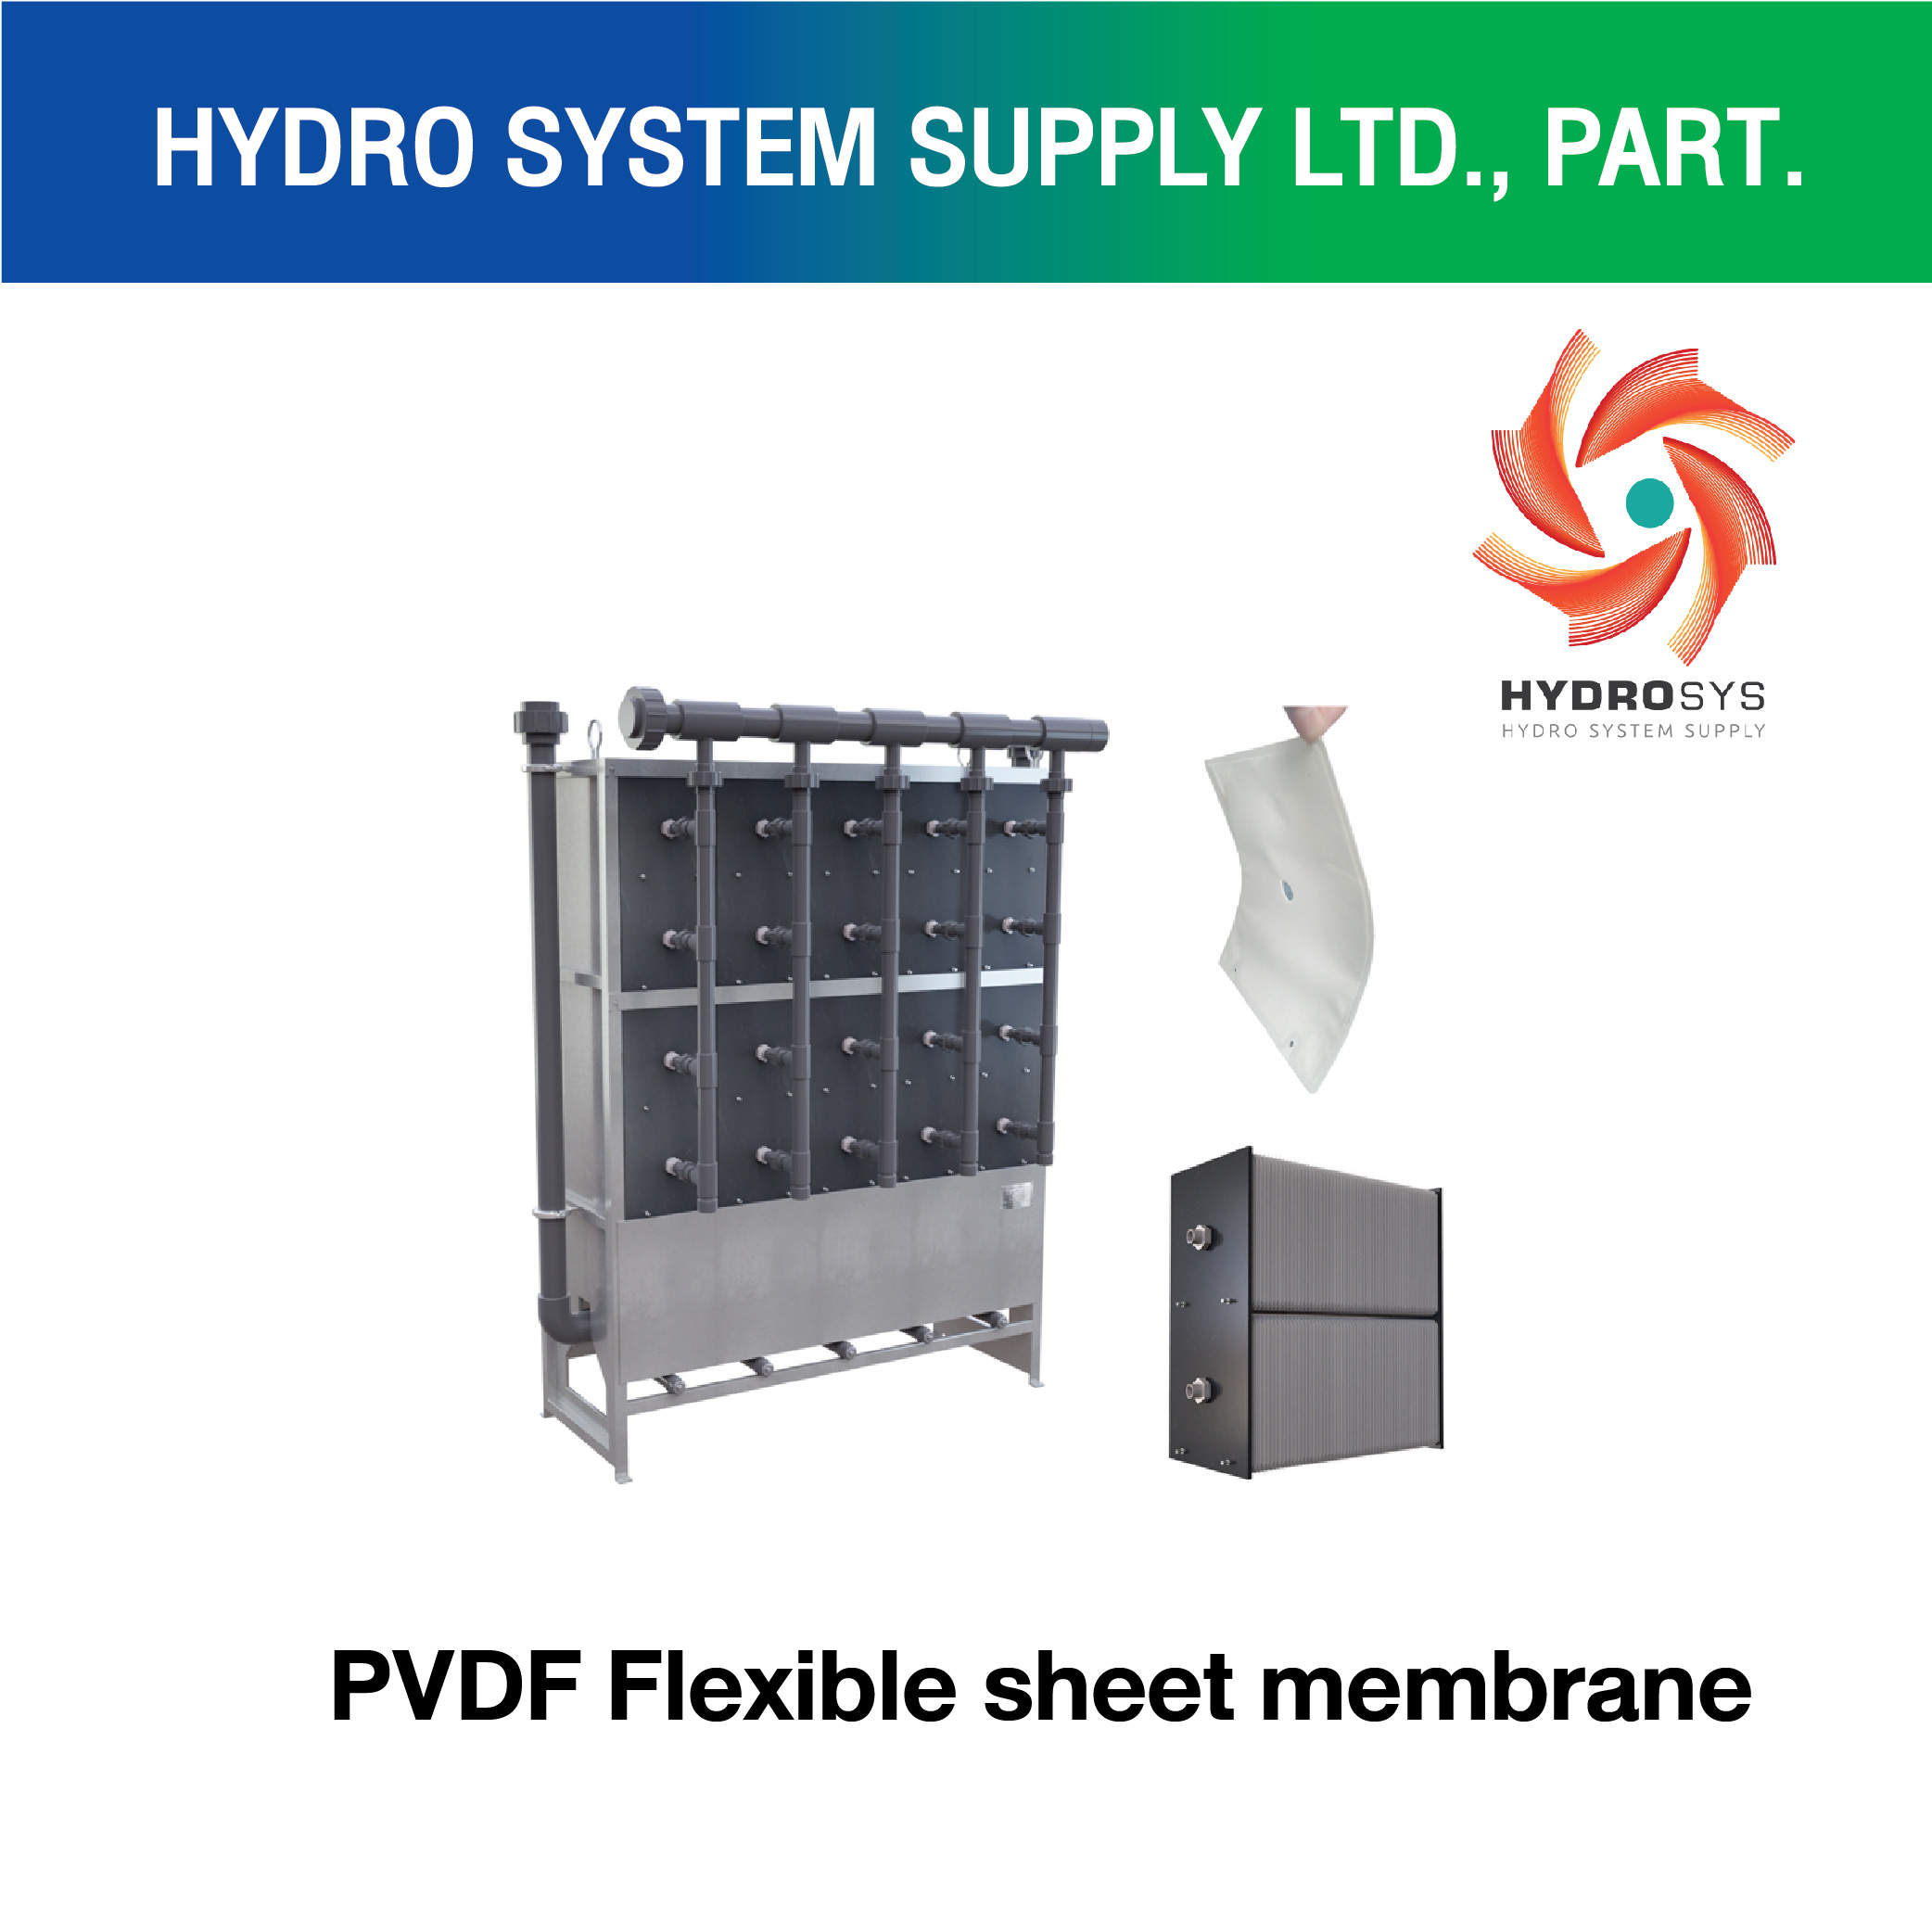 Hydro System Supply Ltd., Part.